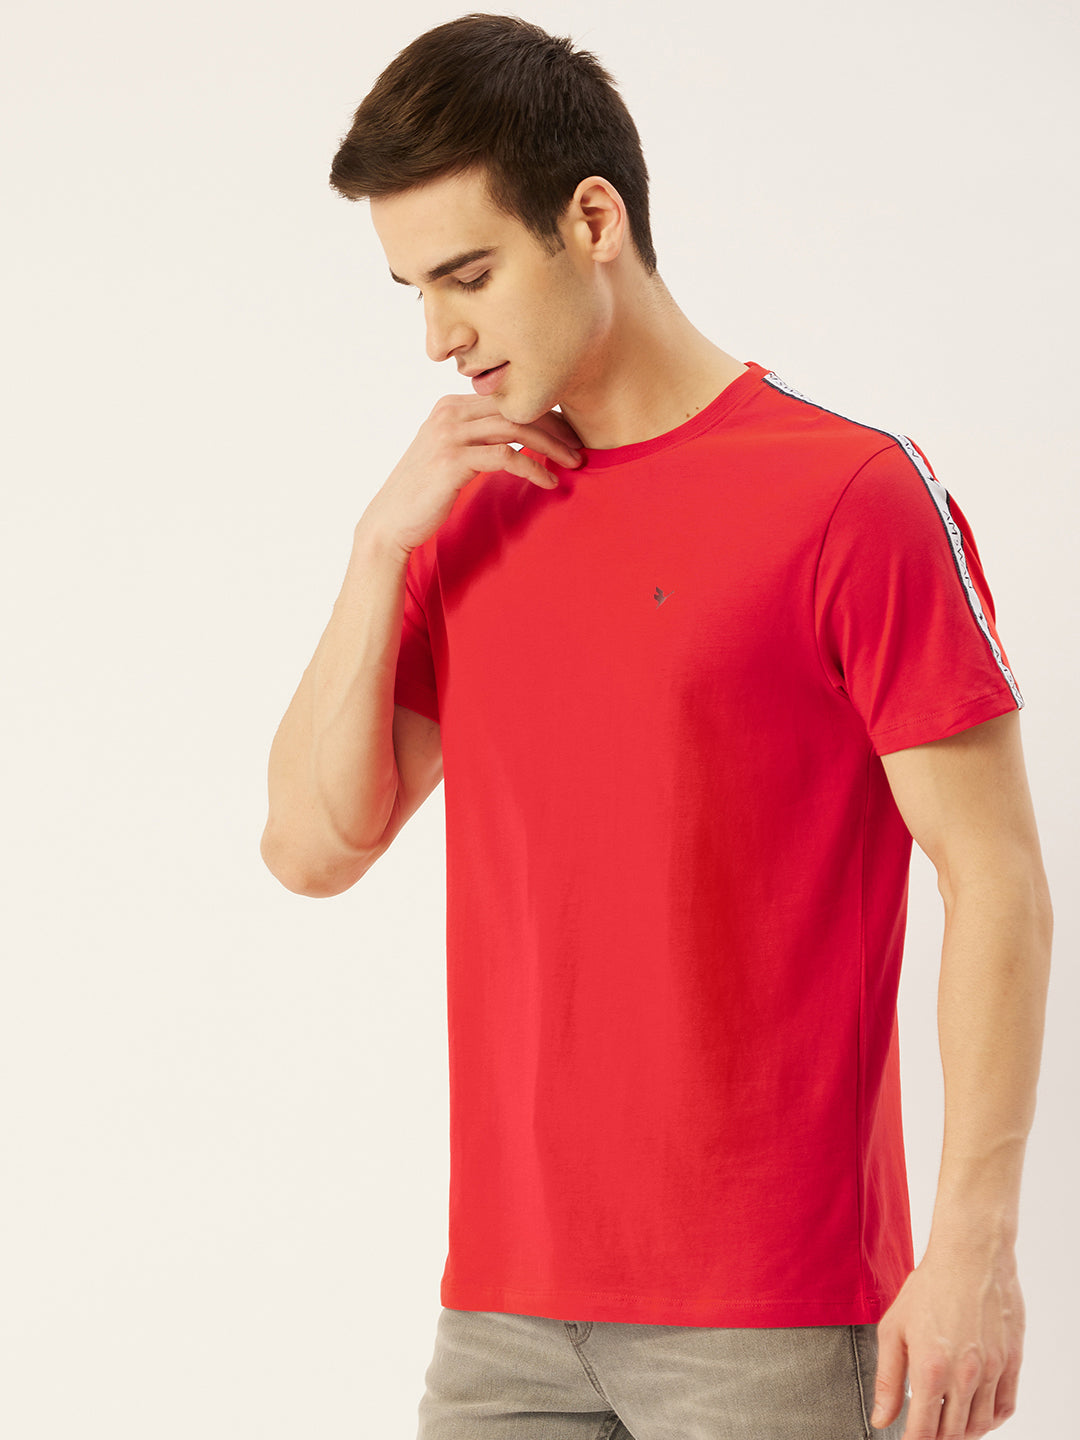 Men's Crew Neck T-Shirts with Half Sleeves in Premium Cotton Lycra